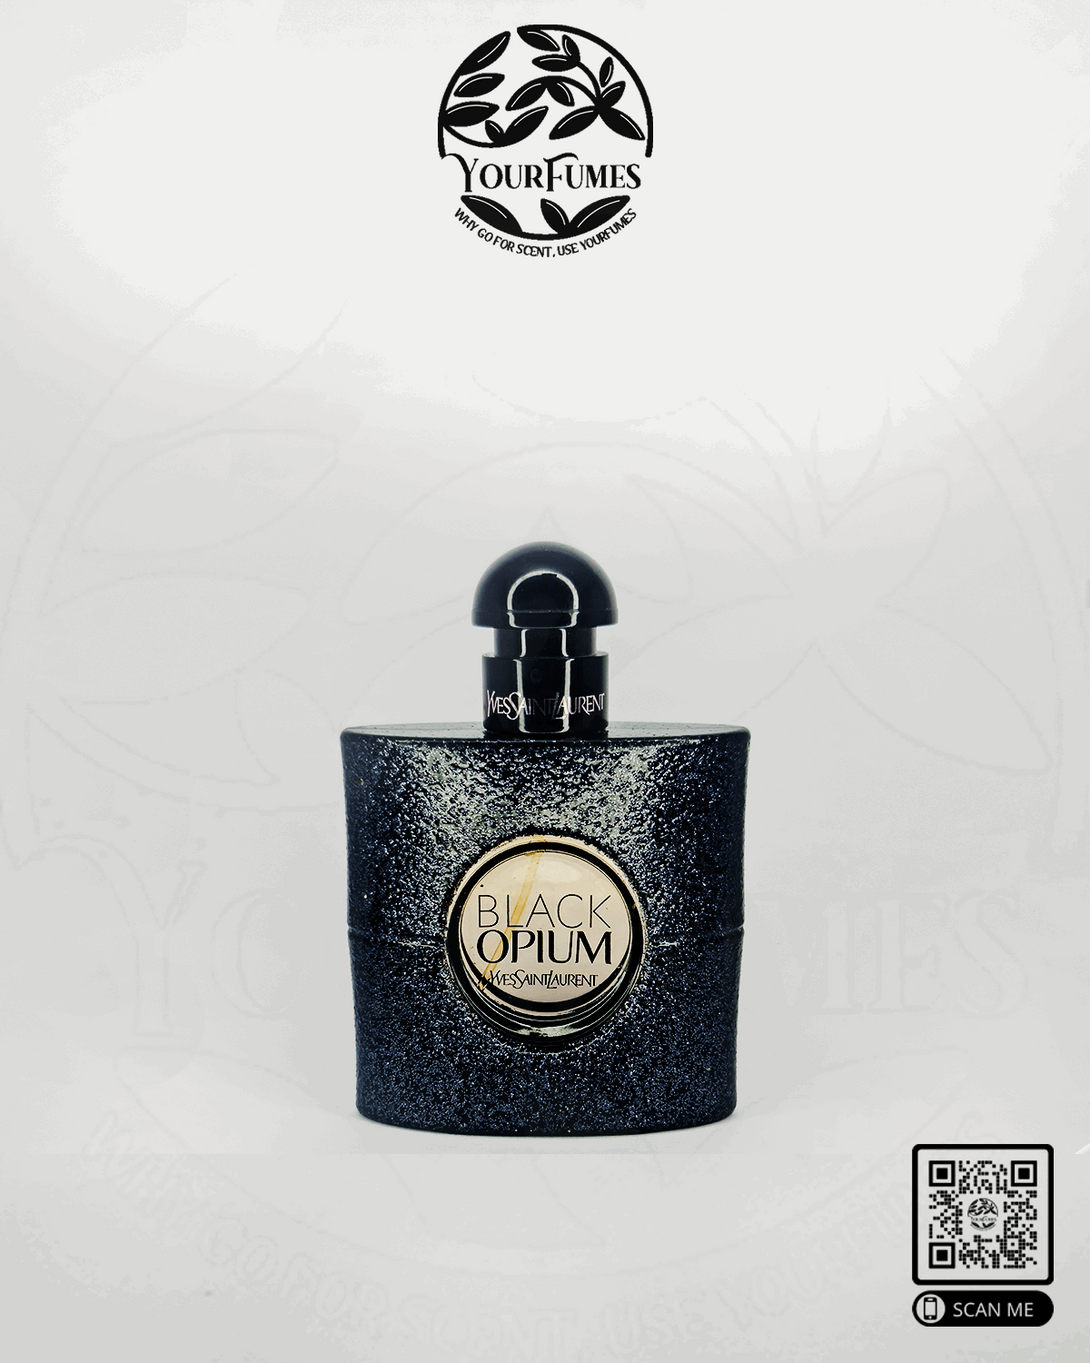 Black Opium - Yourfumes